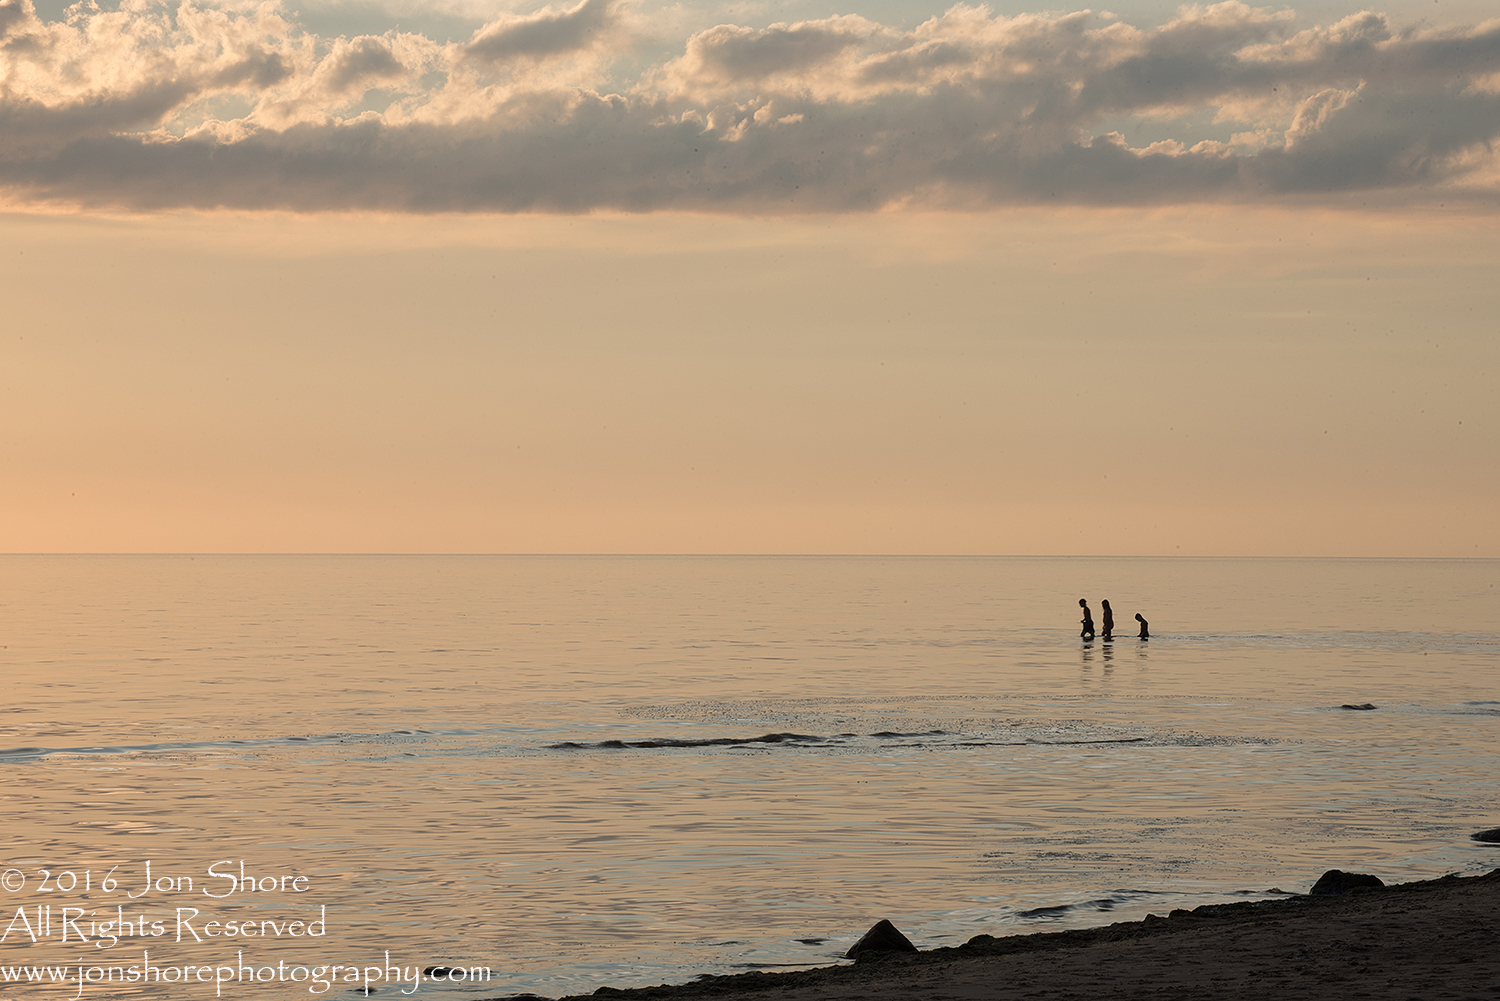 Sunset Tuja, Latvia with boys in the sea. Tamron 200m